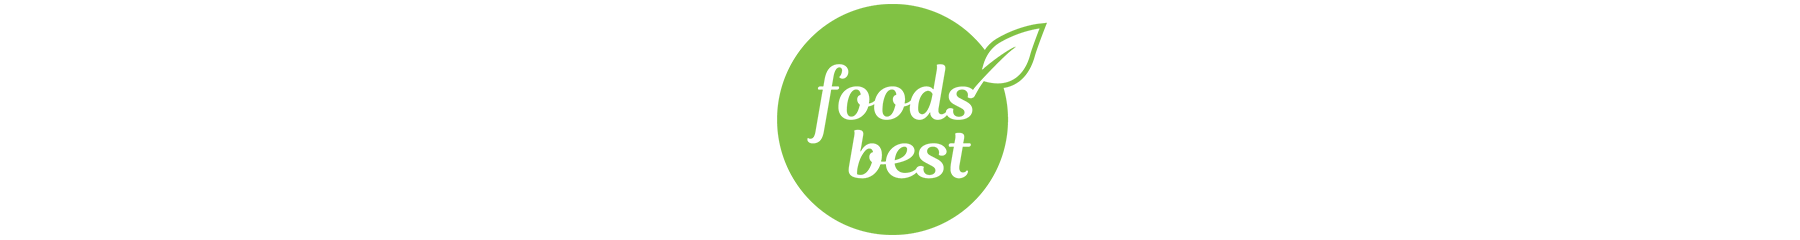 foodsbest logo